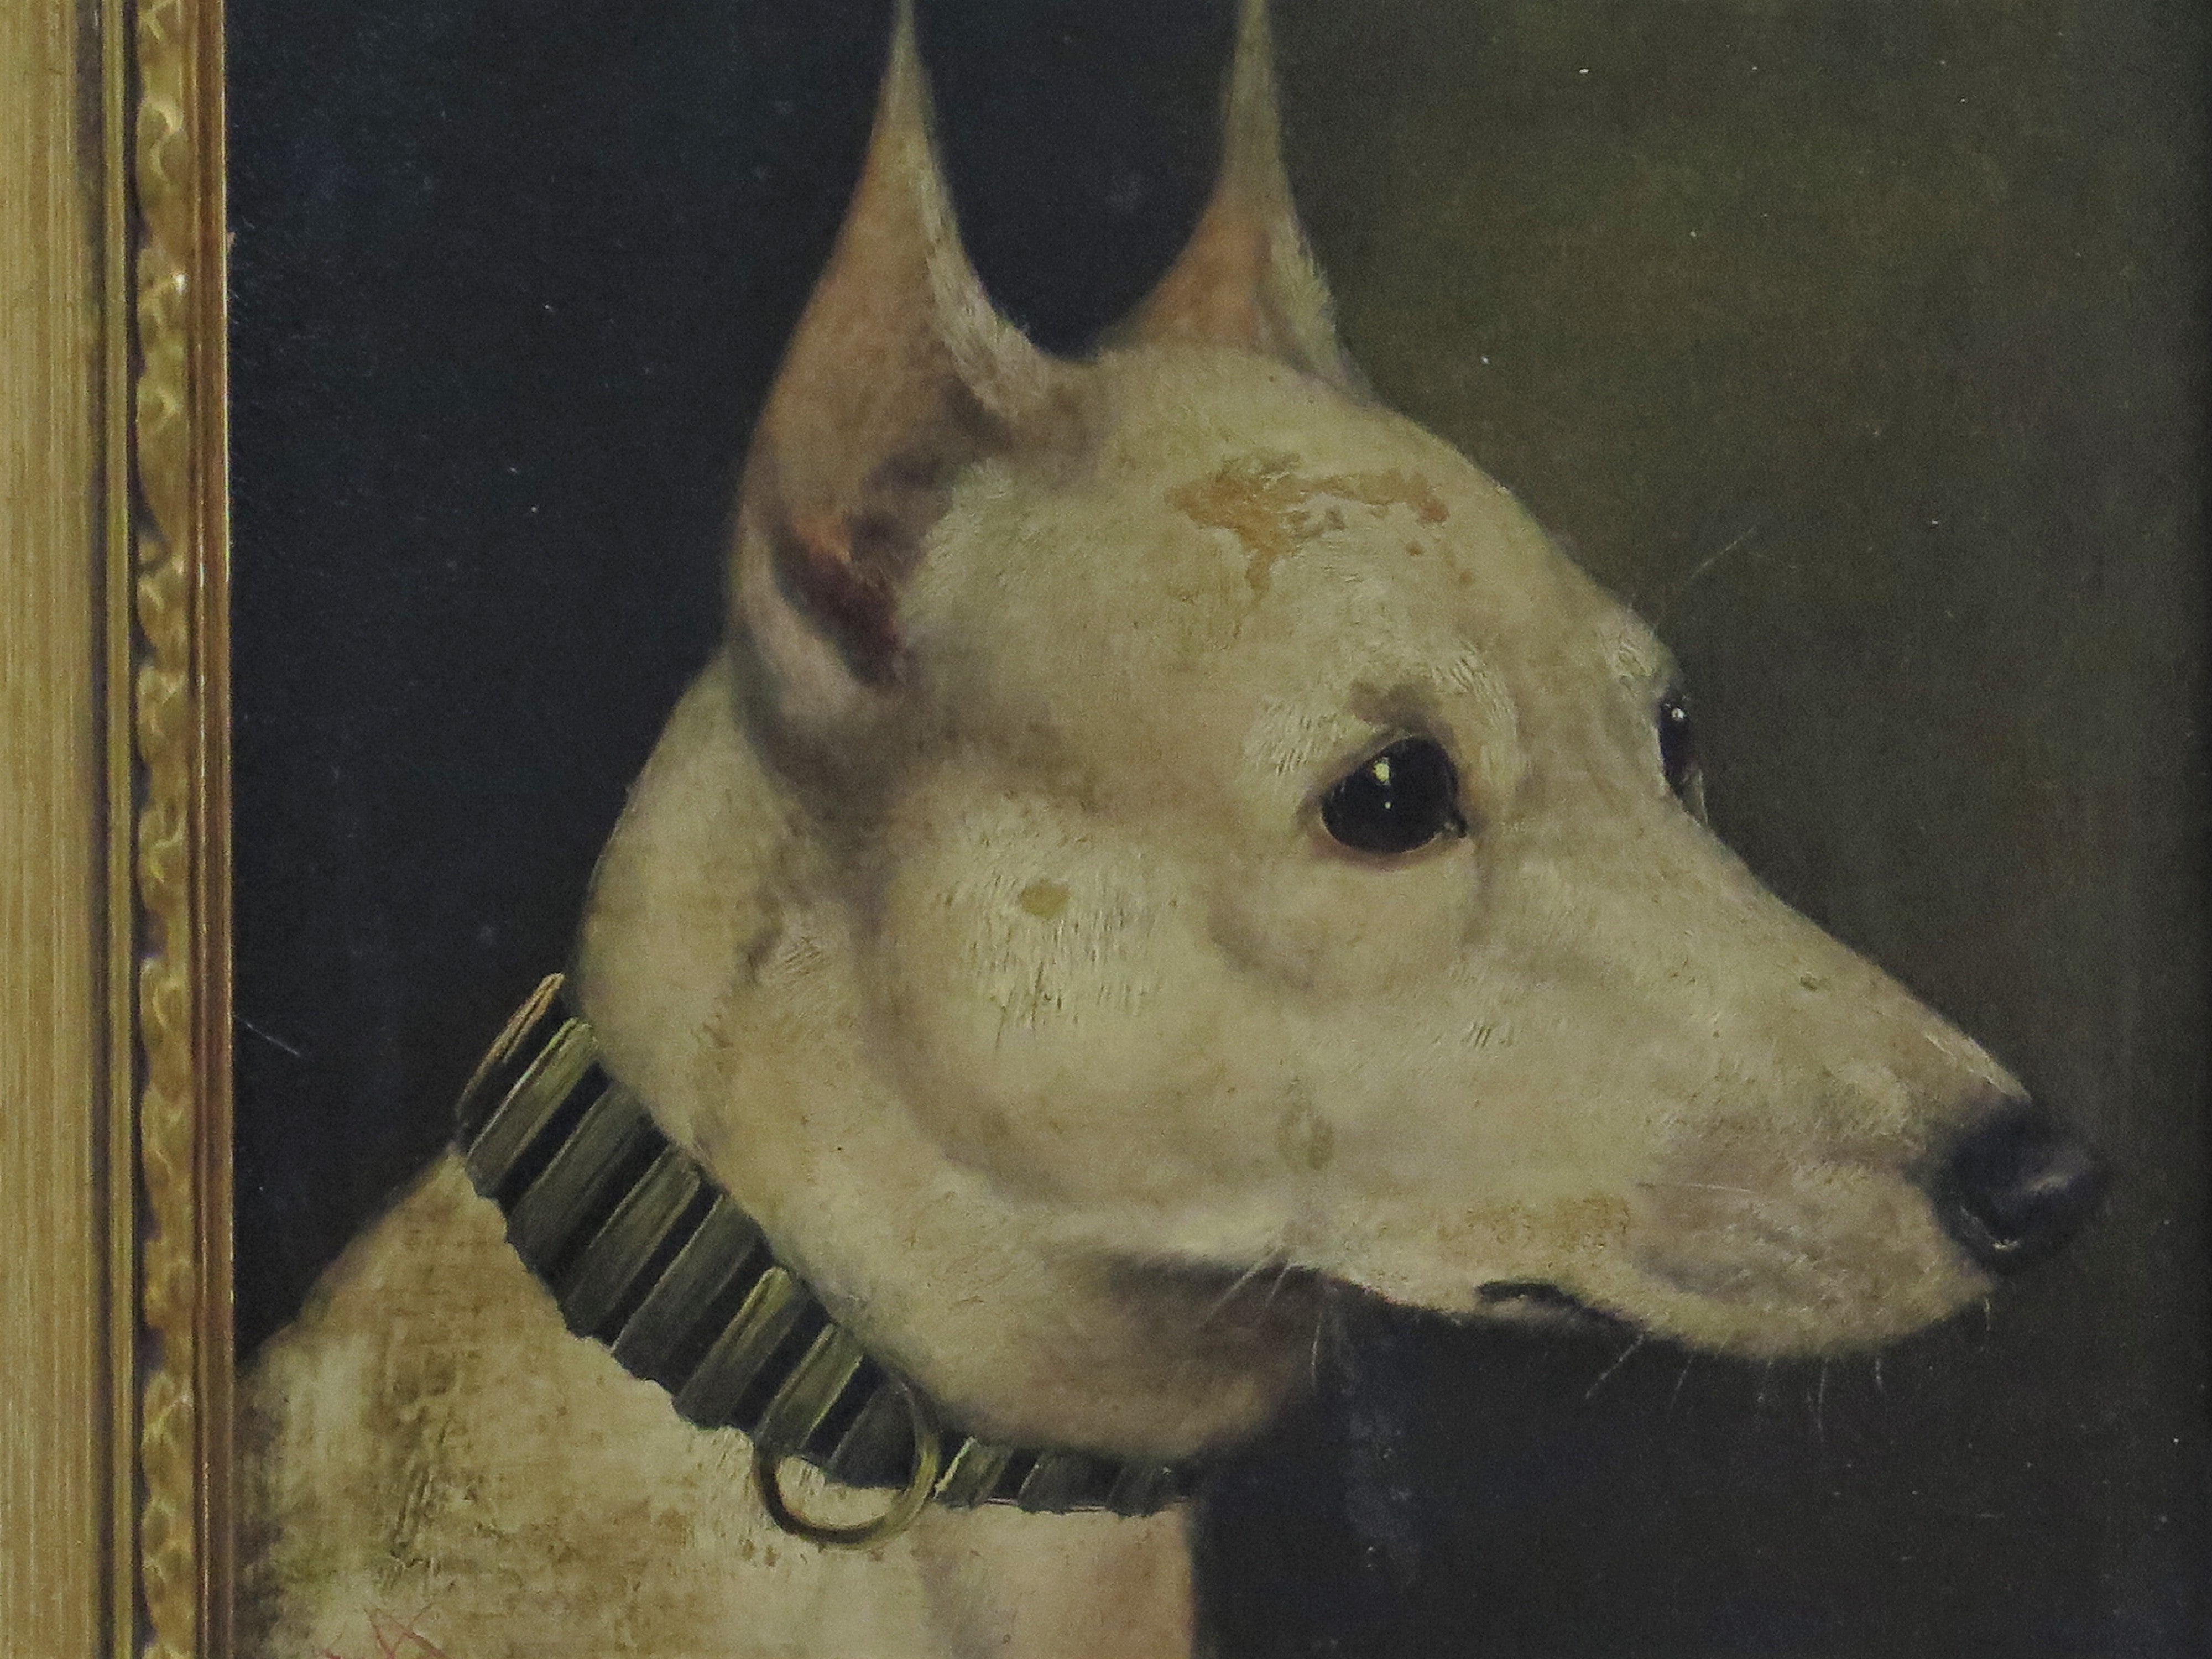 "Bob" Champion Terrier by Edward Aistrop (England, 1880-1920)